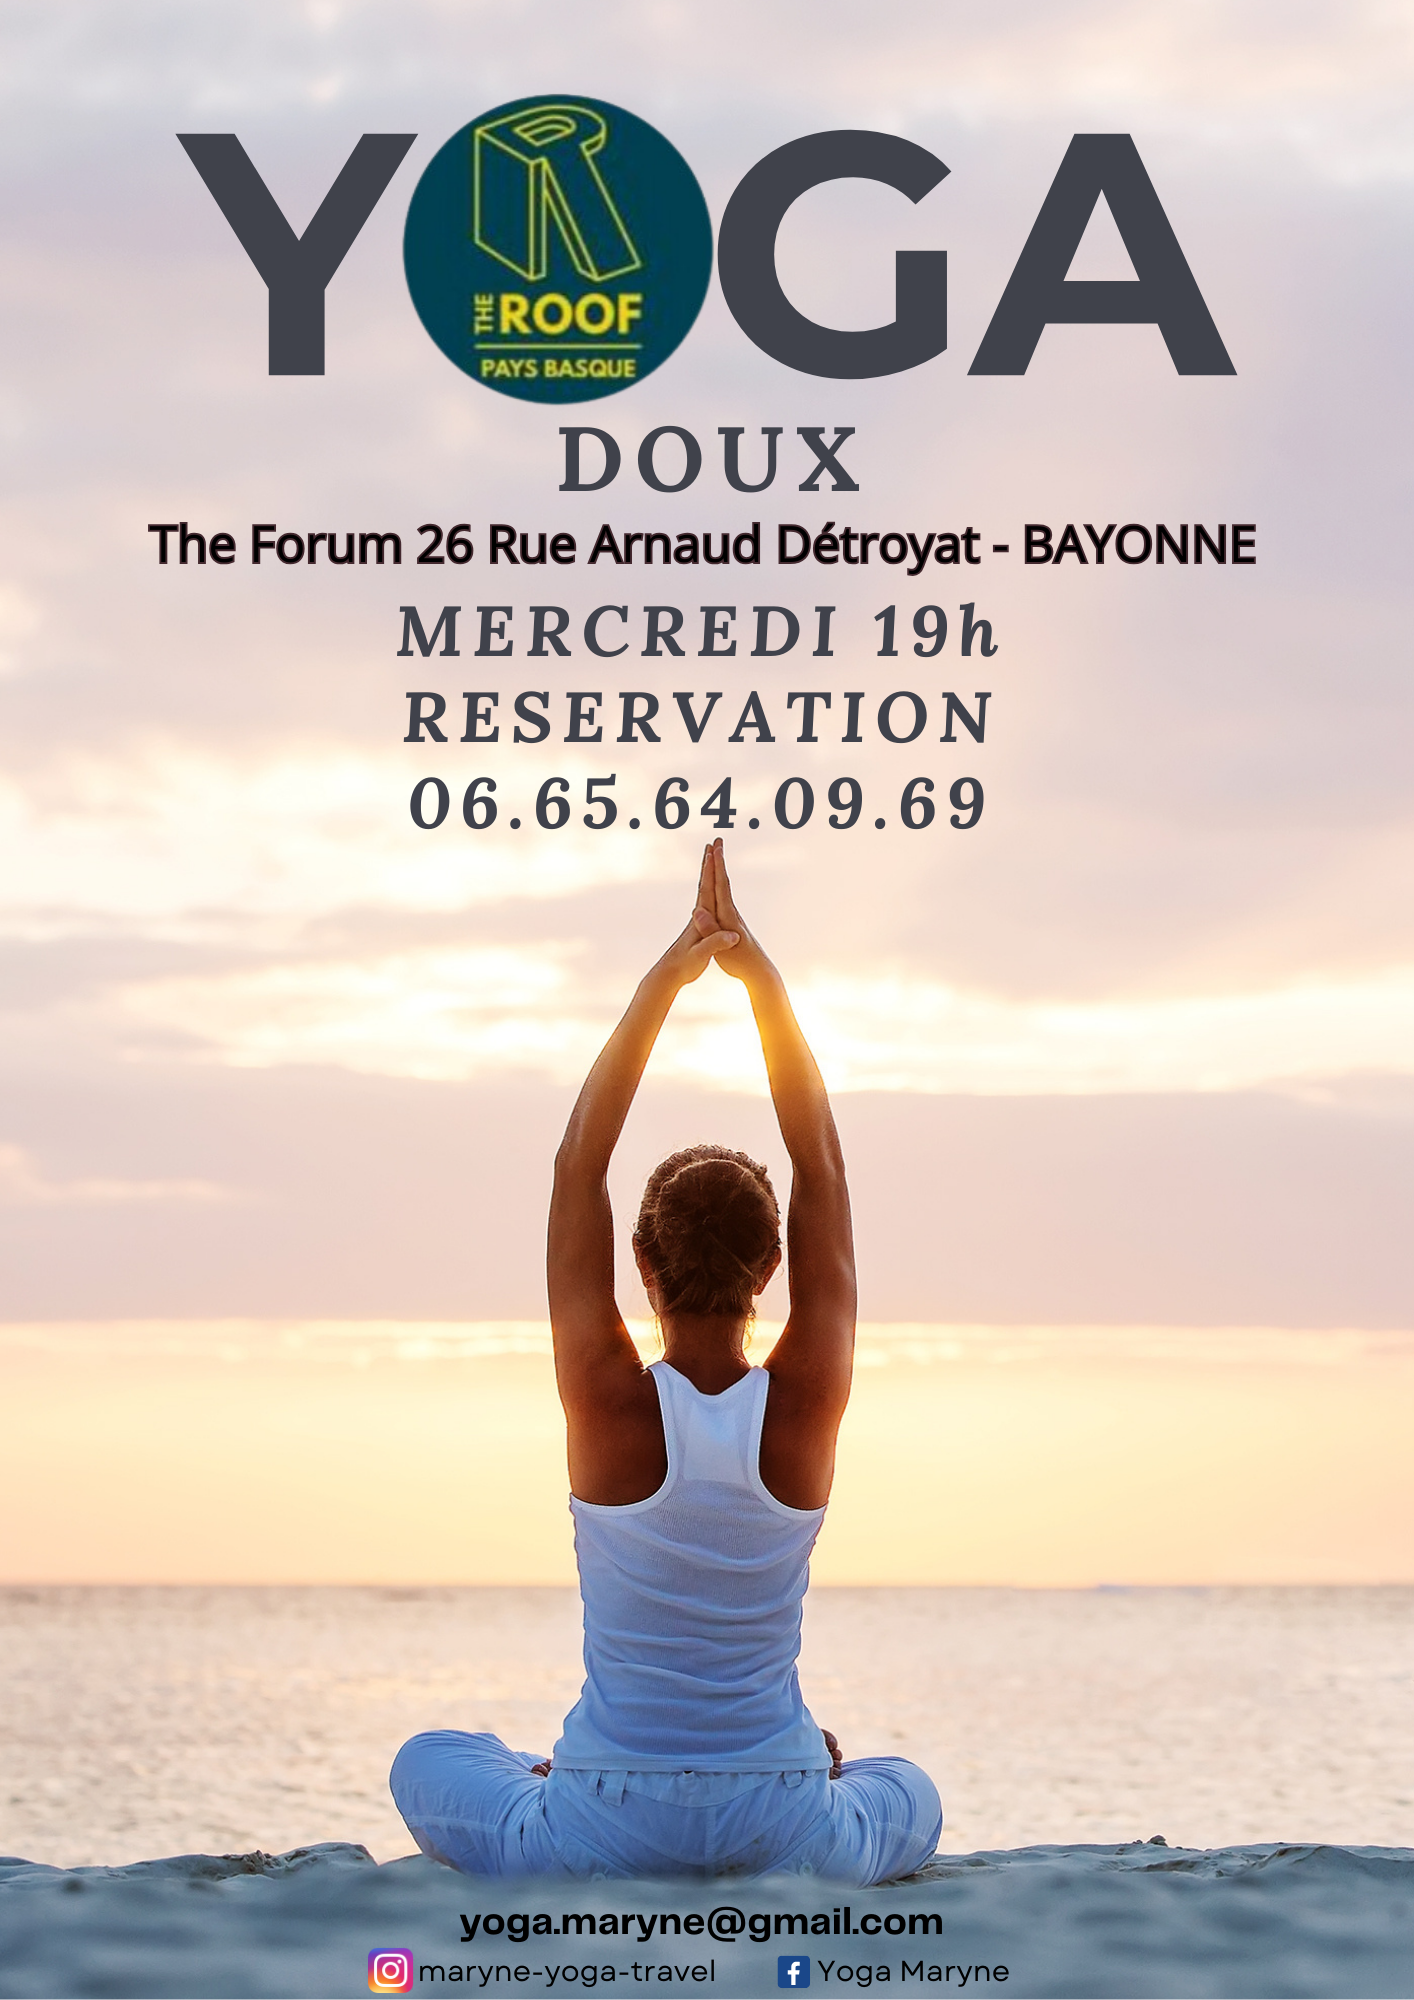 Yoga doux Mercredi 19h Bayonne (29/05)